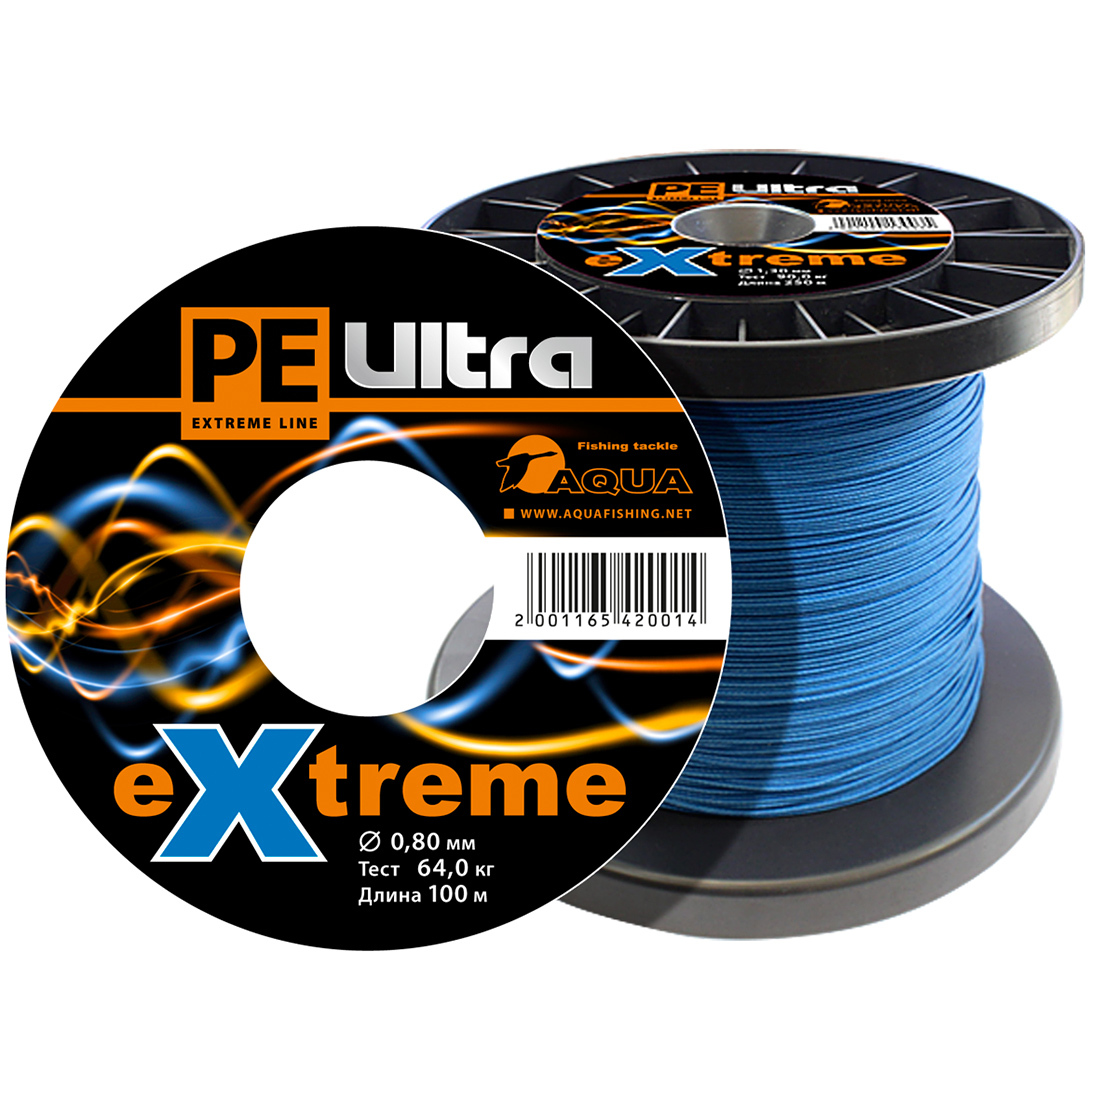 Плетеный Шнур Для Рыбалки Aqua Pe Ultra Extreme 0,80mm (Цвет Синий) 100m